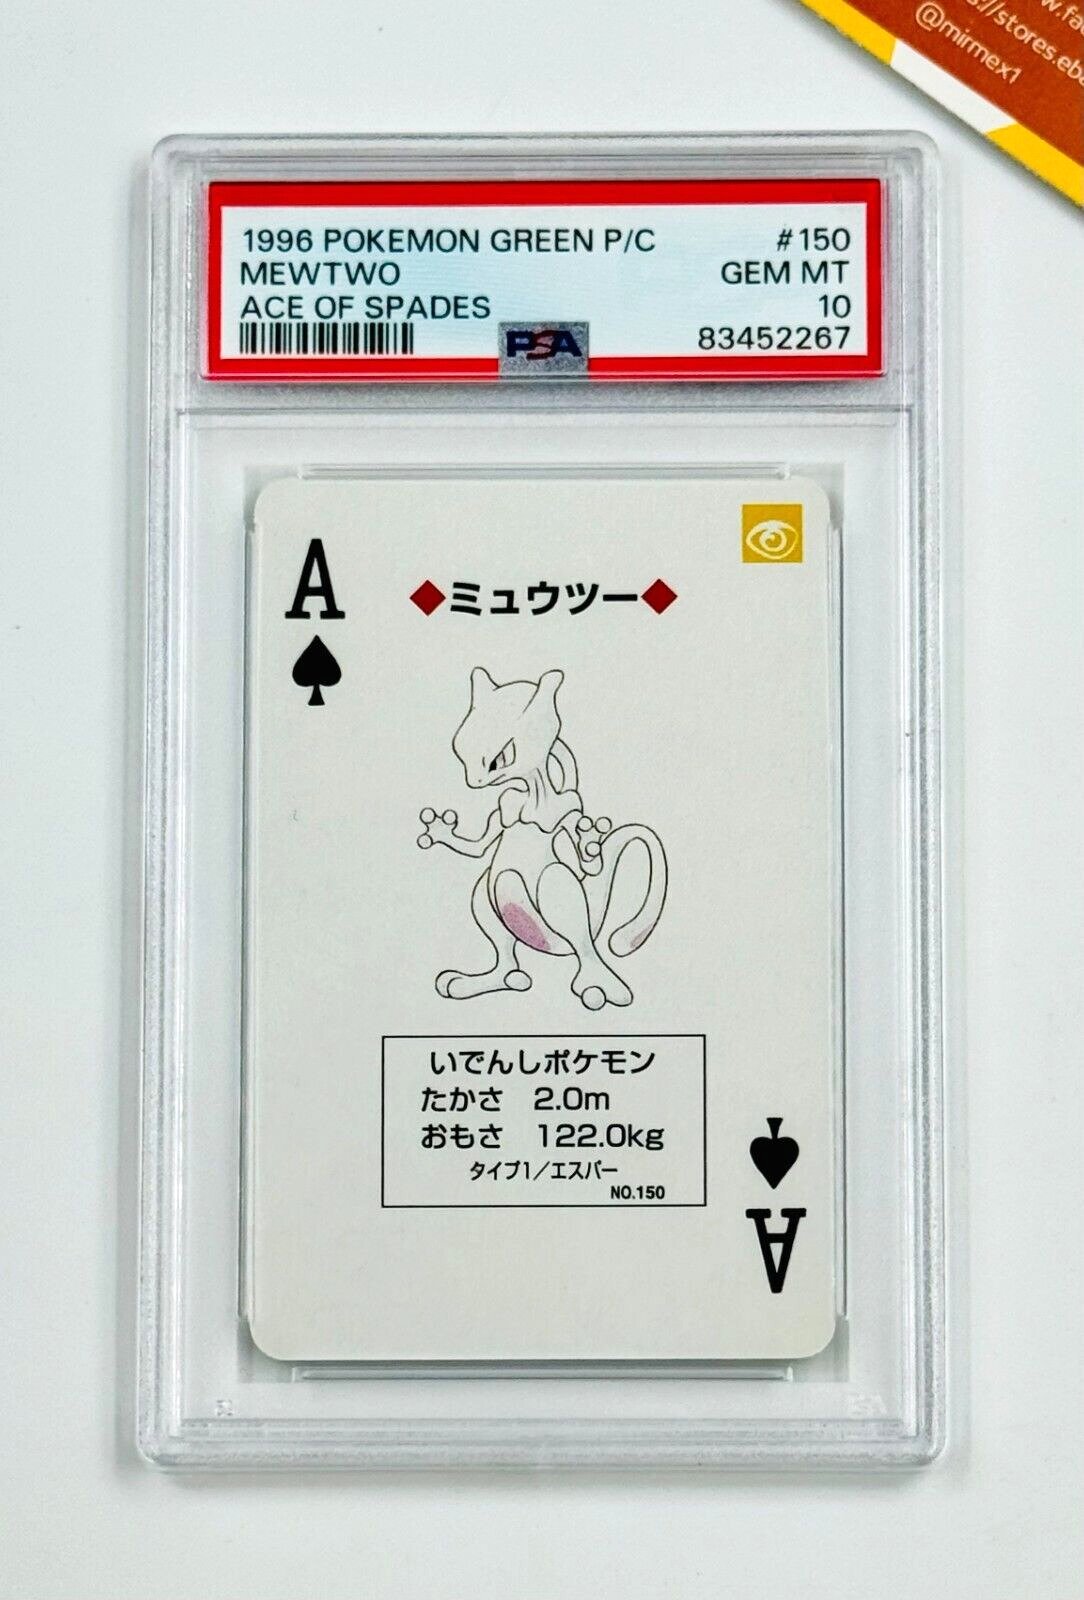 1996 Pokemon PSA 10 Mewtwo #150 Ace of Spades Green Playing Card Poker Japanese